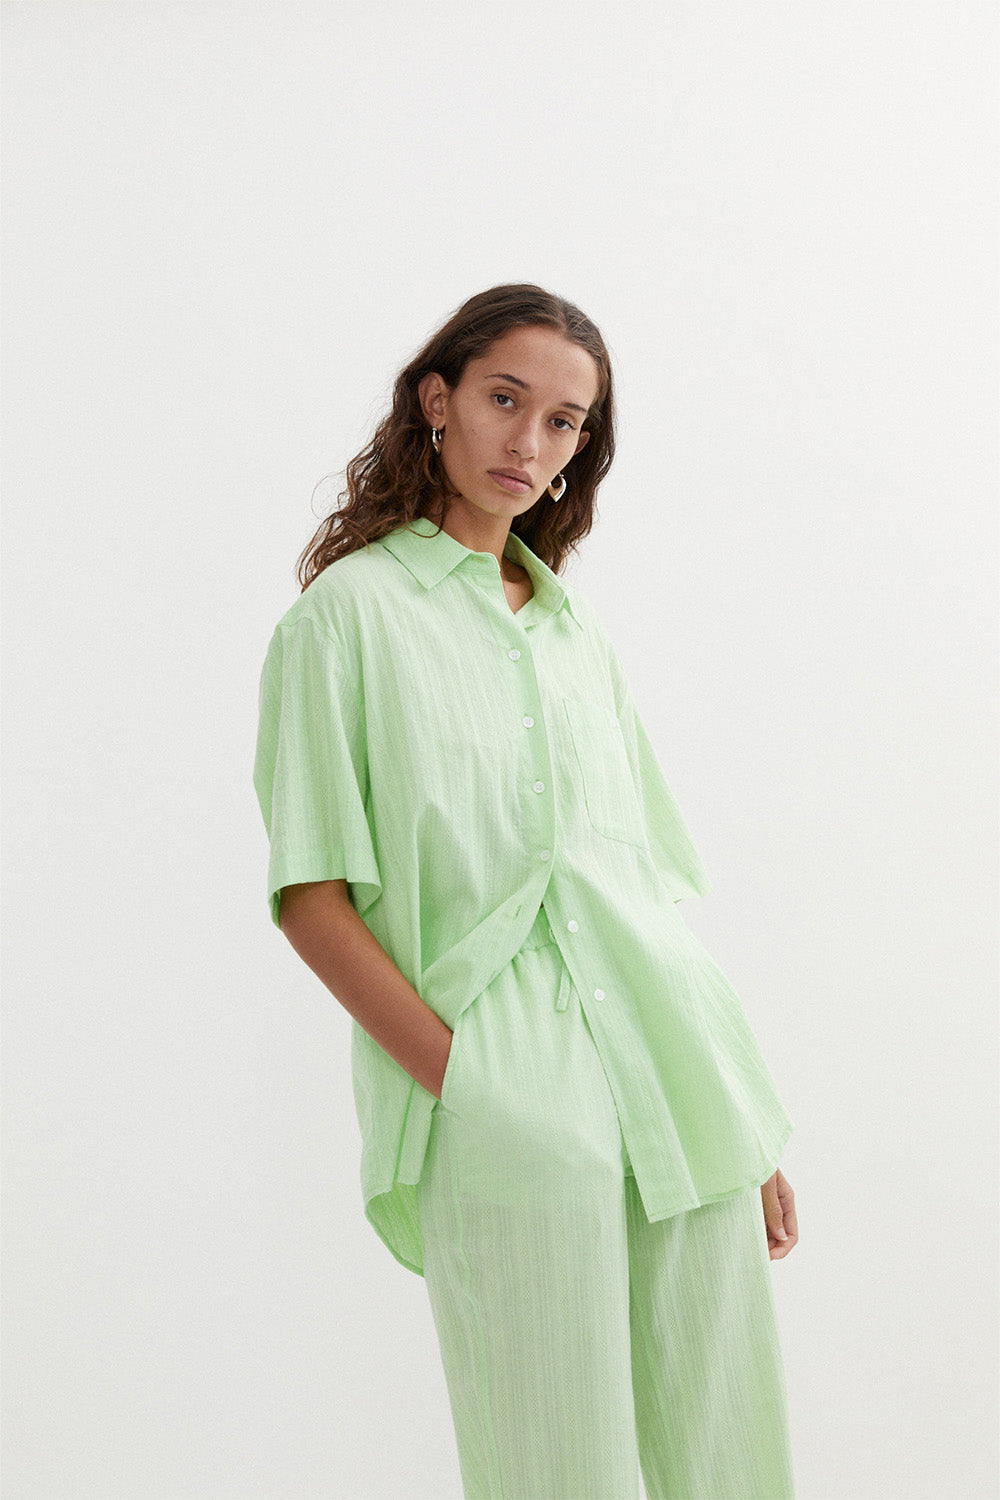 Primrose Shirt in Green by BLANCA